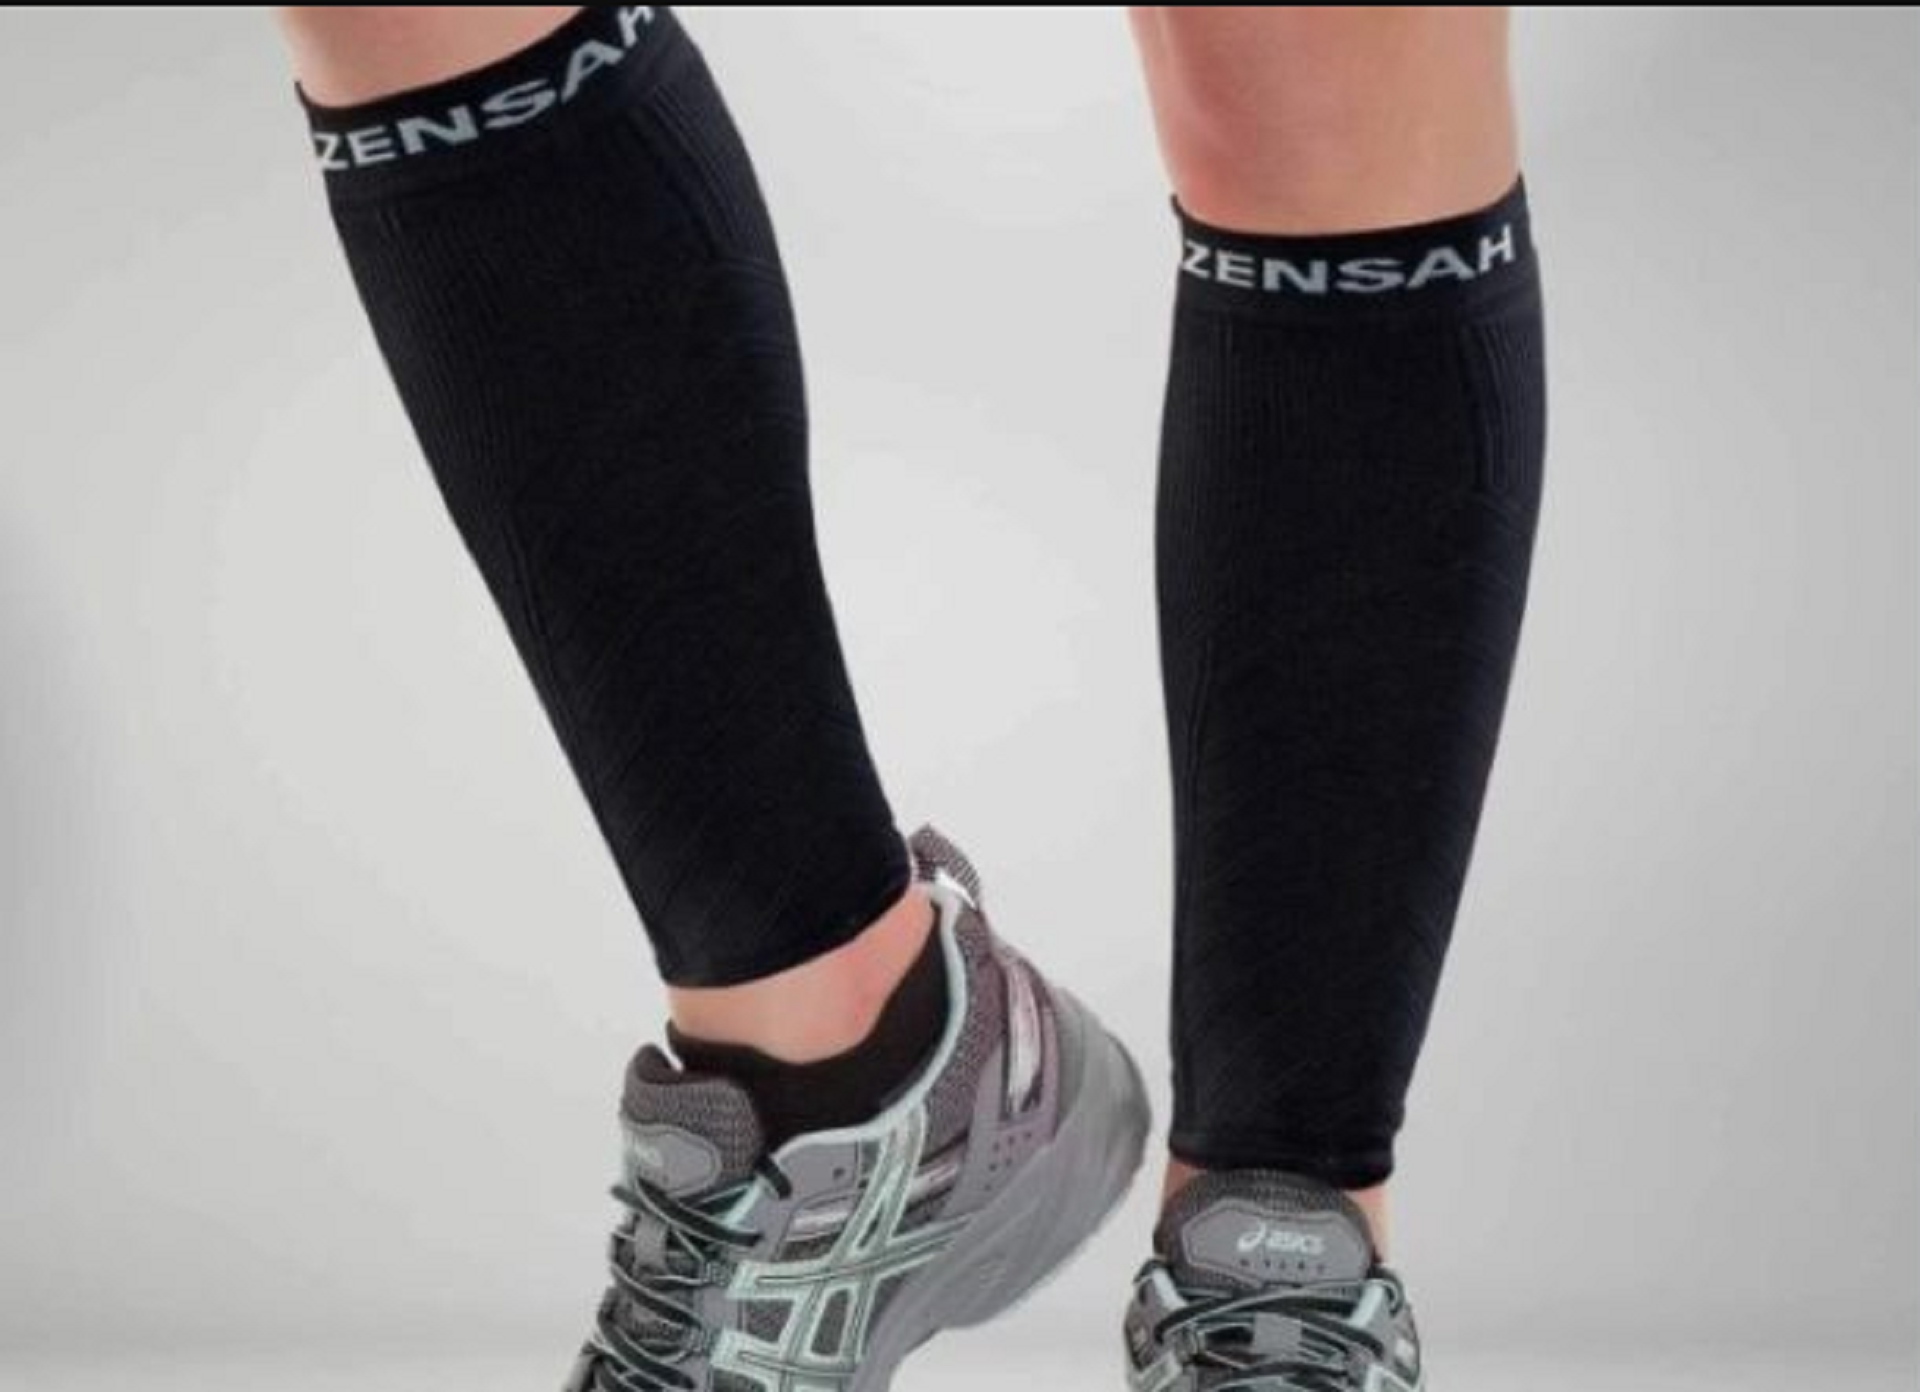 zensha leg compression sleeves